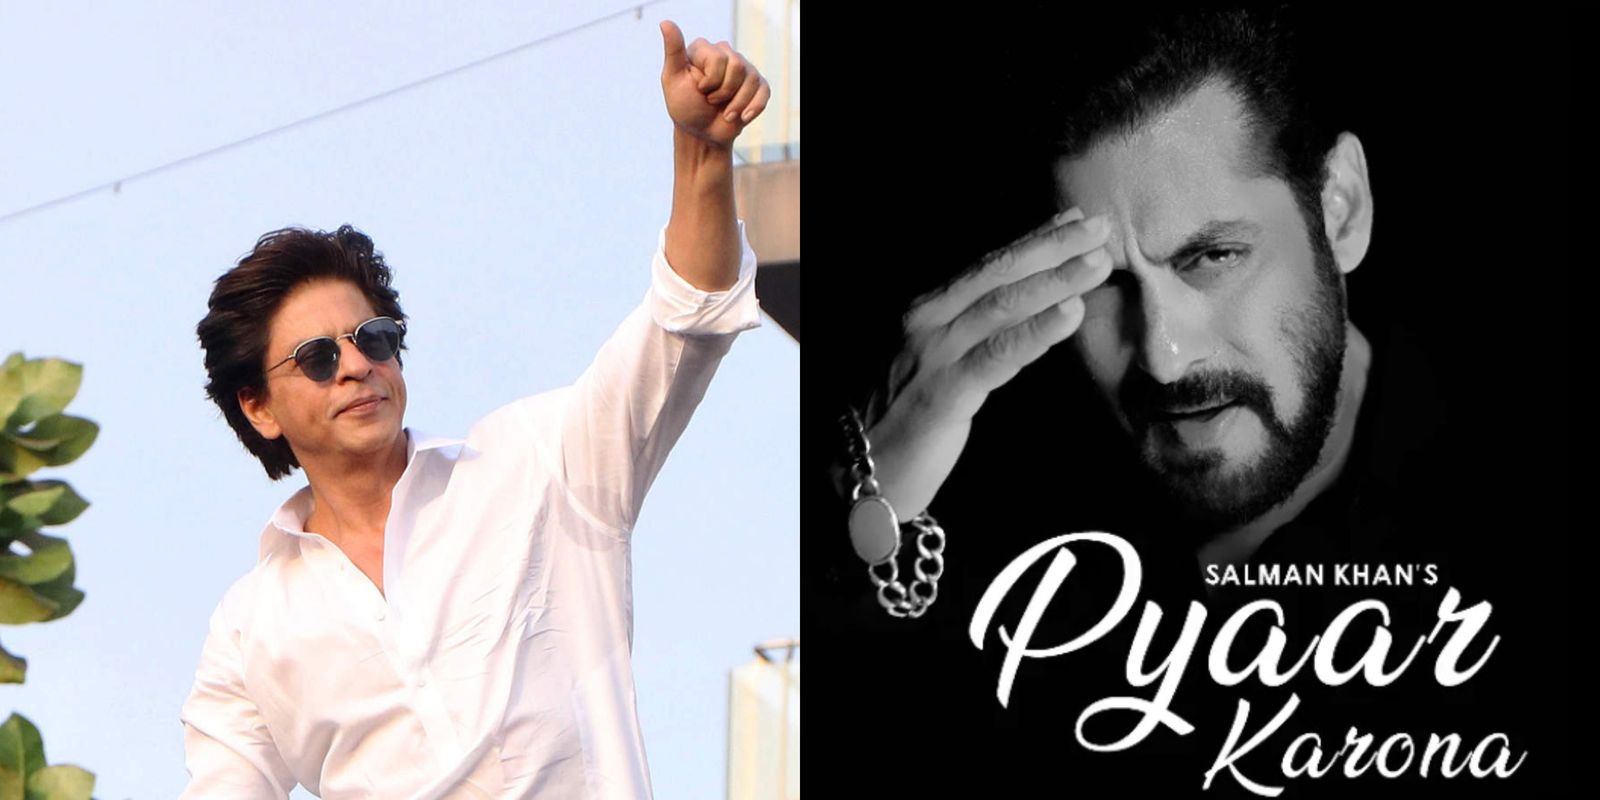 Shah Rukh Khan Shares His Opinion On Salman Khan’s Track Pyaar Karona; Reveals How He’s Spending Lockdown